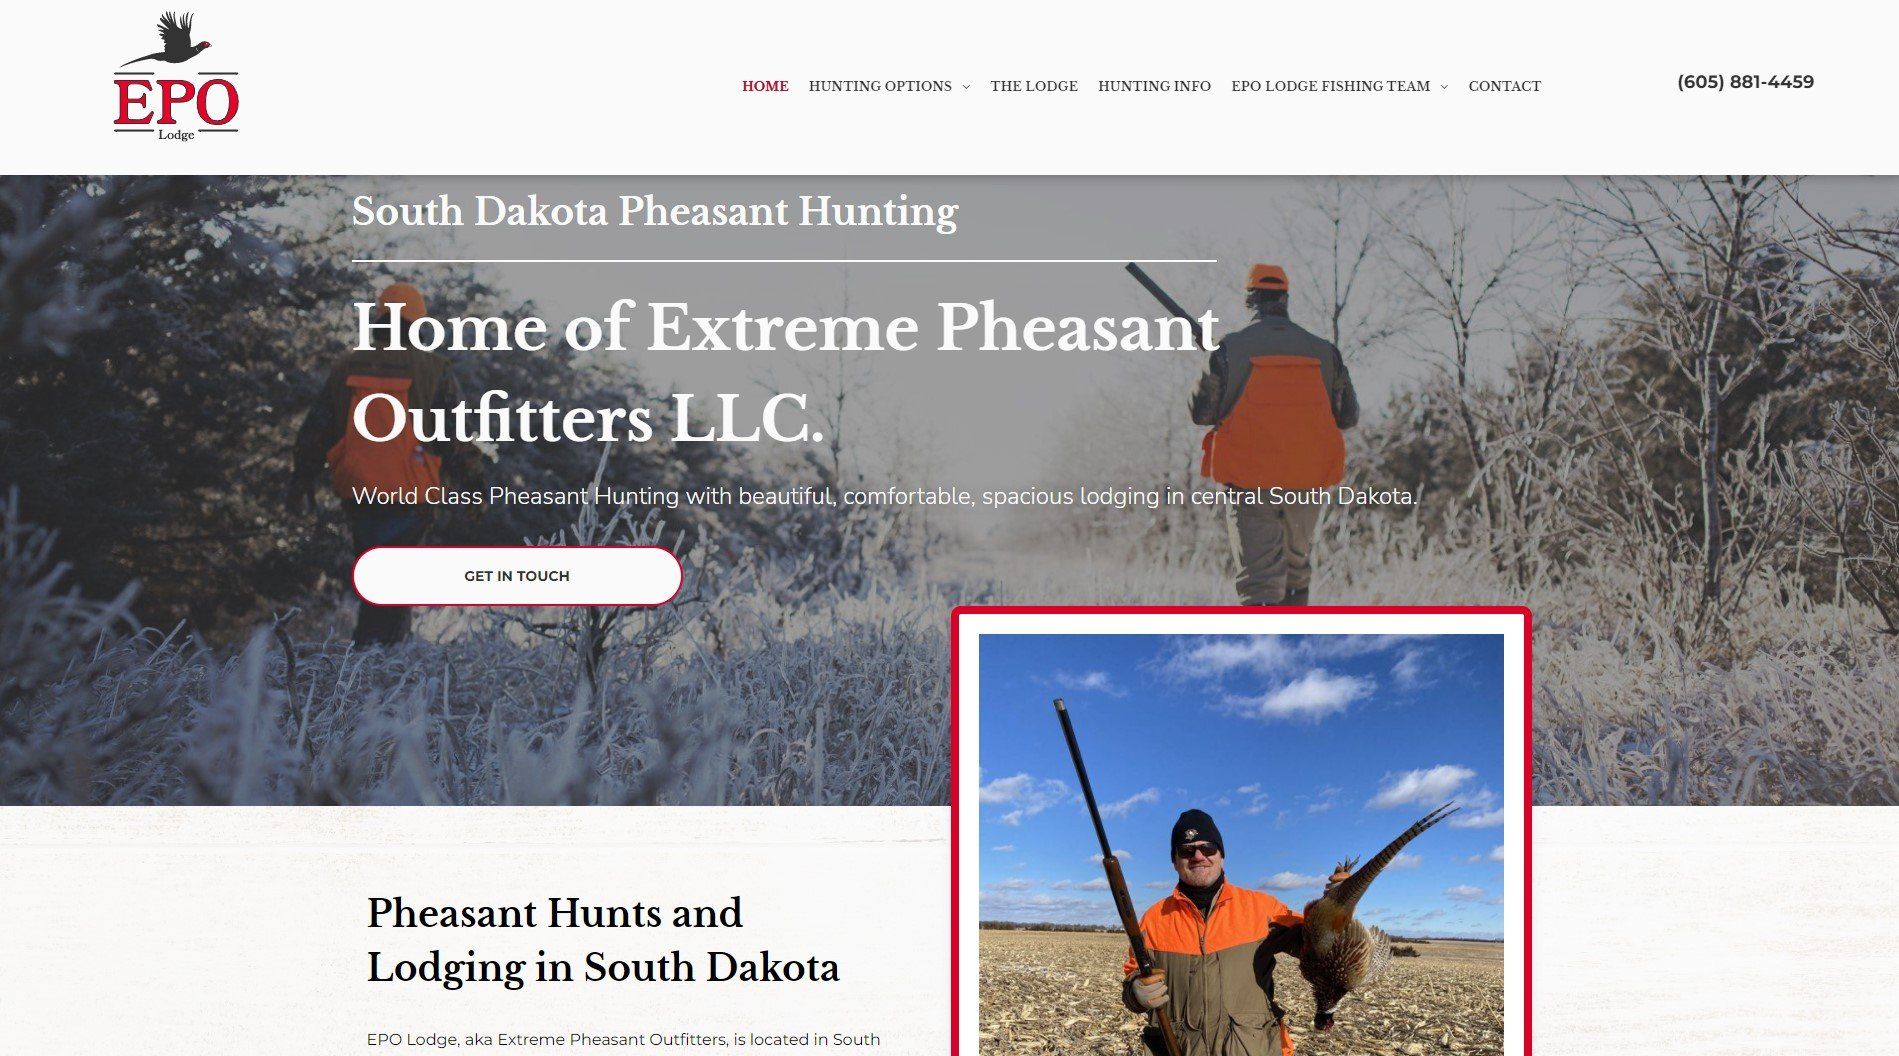 Hunting Industry Marketing Online